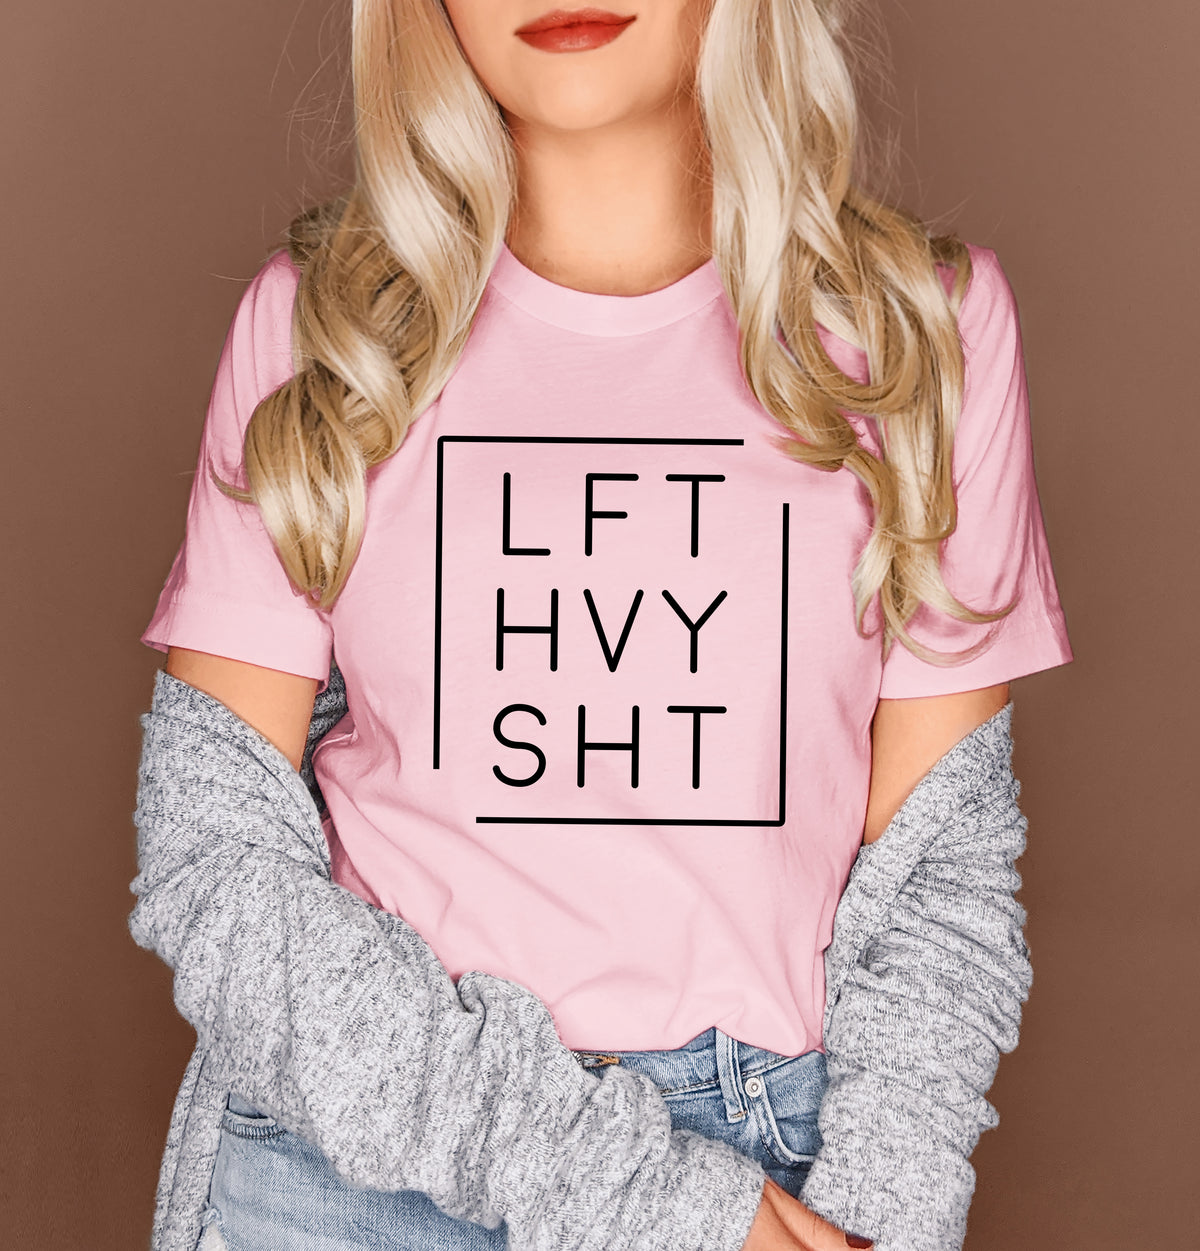 Pink shirt that says lift heavy shit - HighCiti